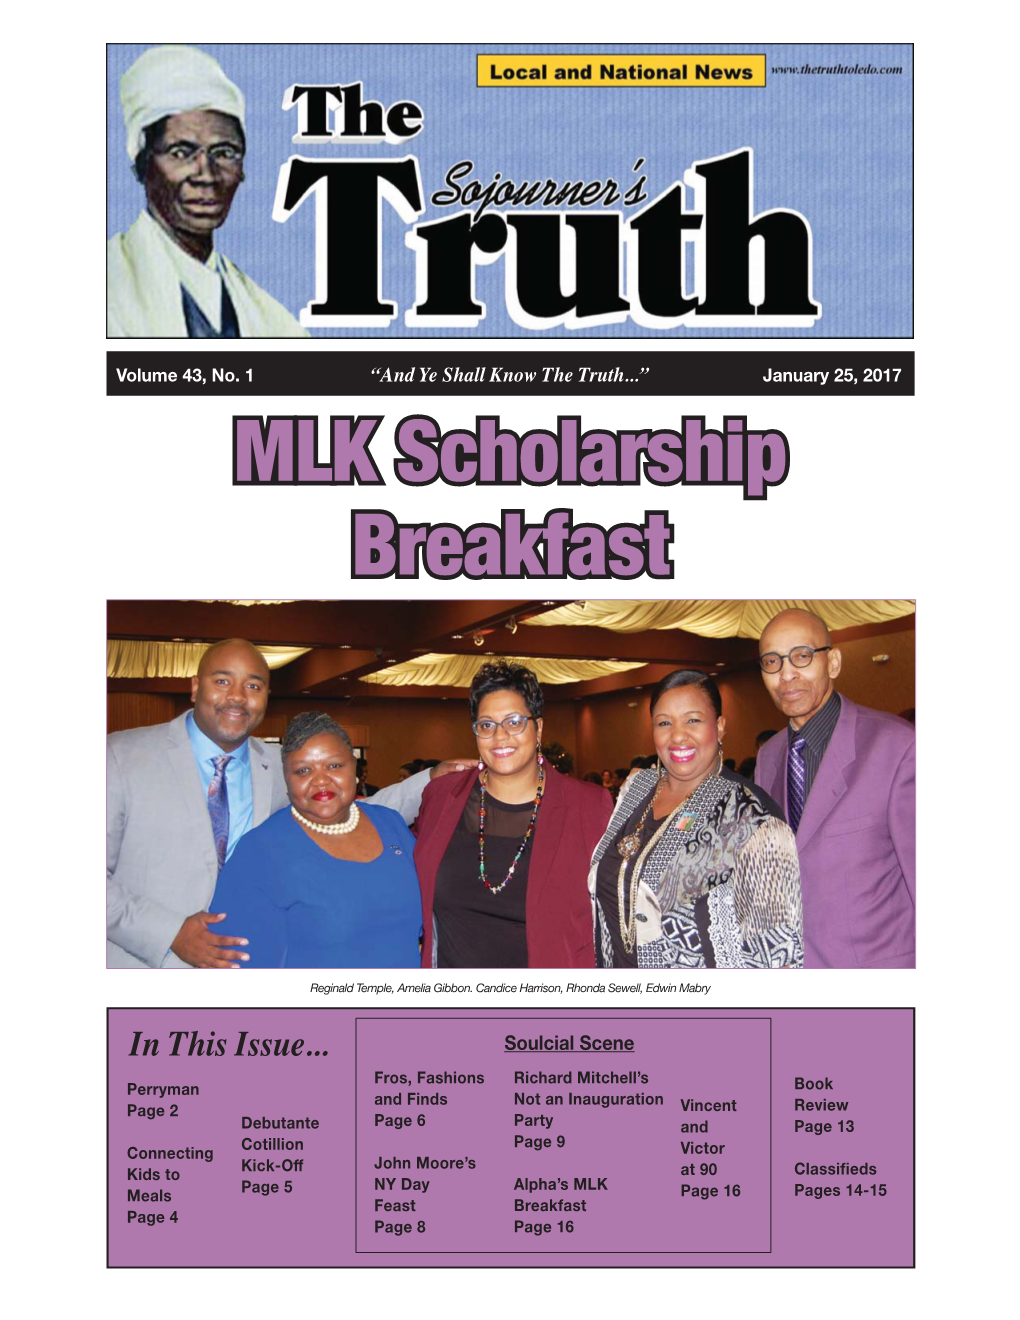 MLK Scholarship Breakfast